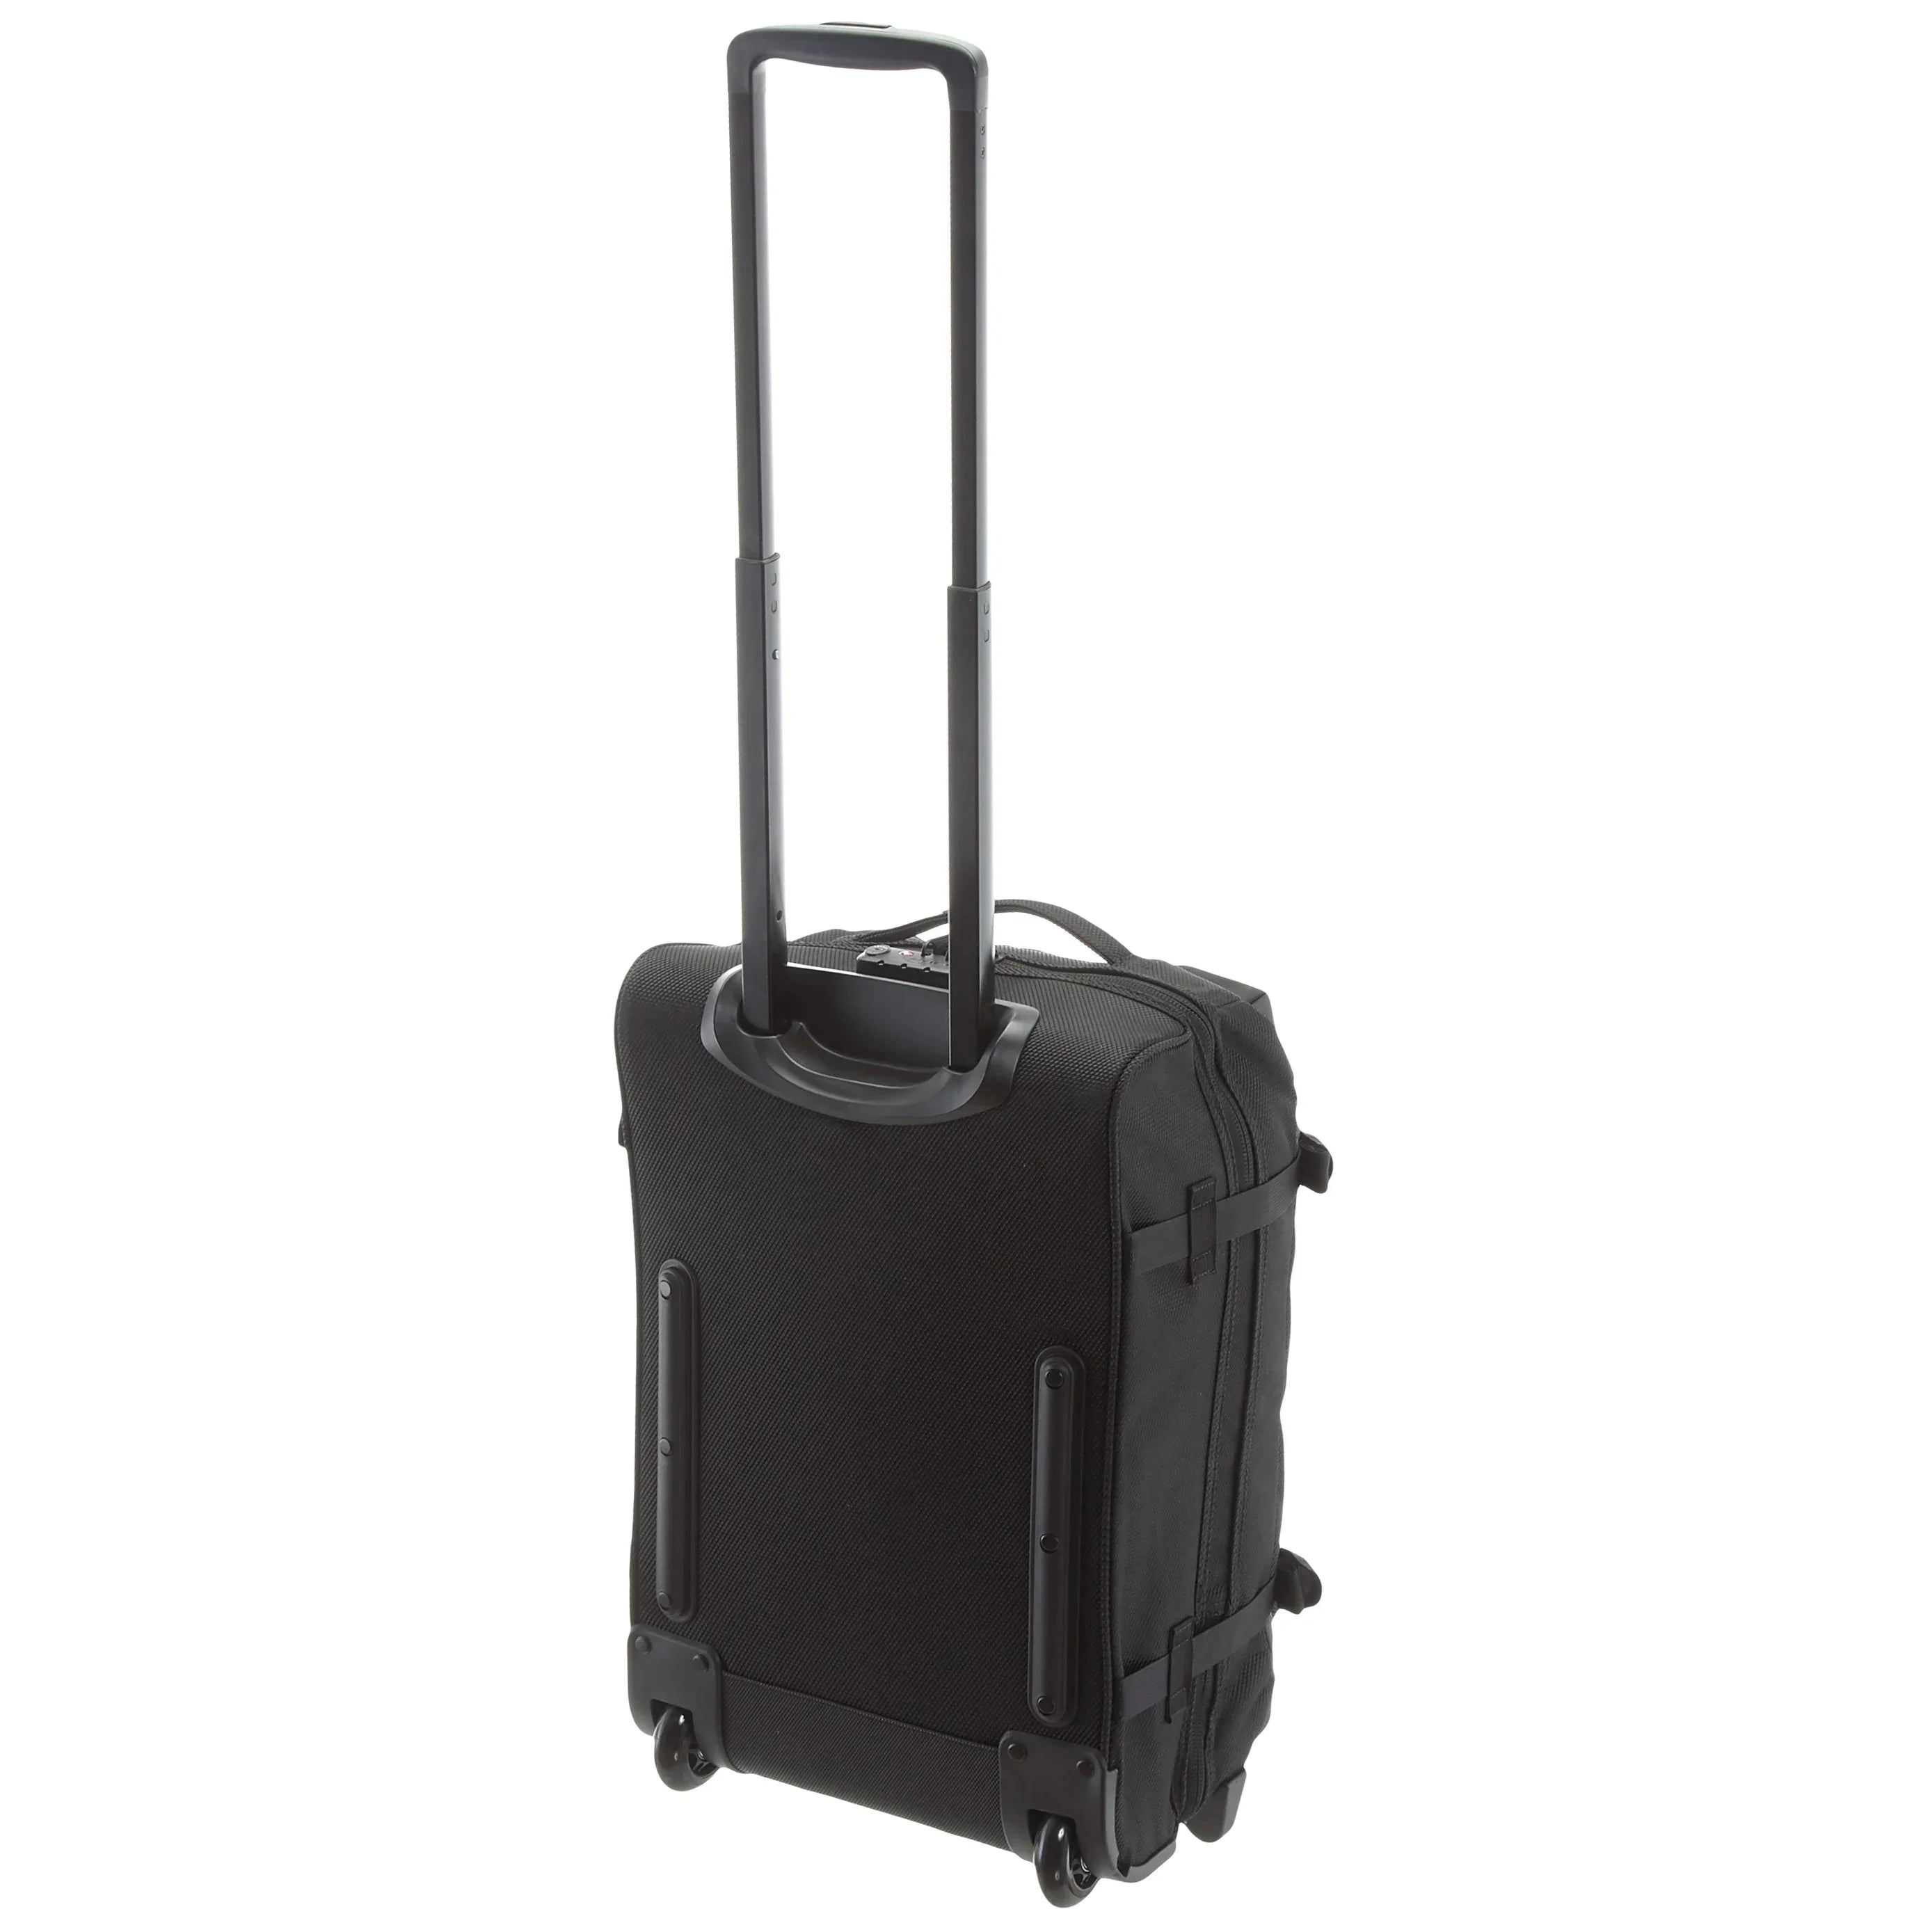 Eastpak Authentic Travel Tranverz CNNCT Rolling Travel Bag 51 cm - Ripstop